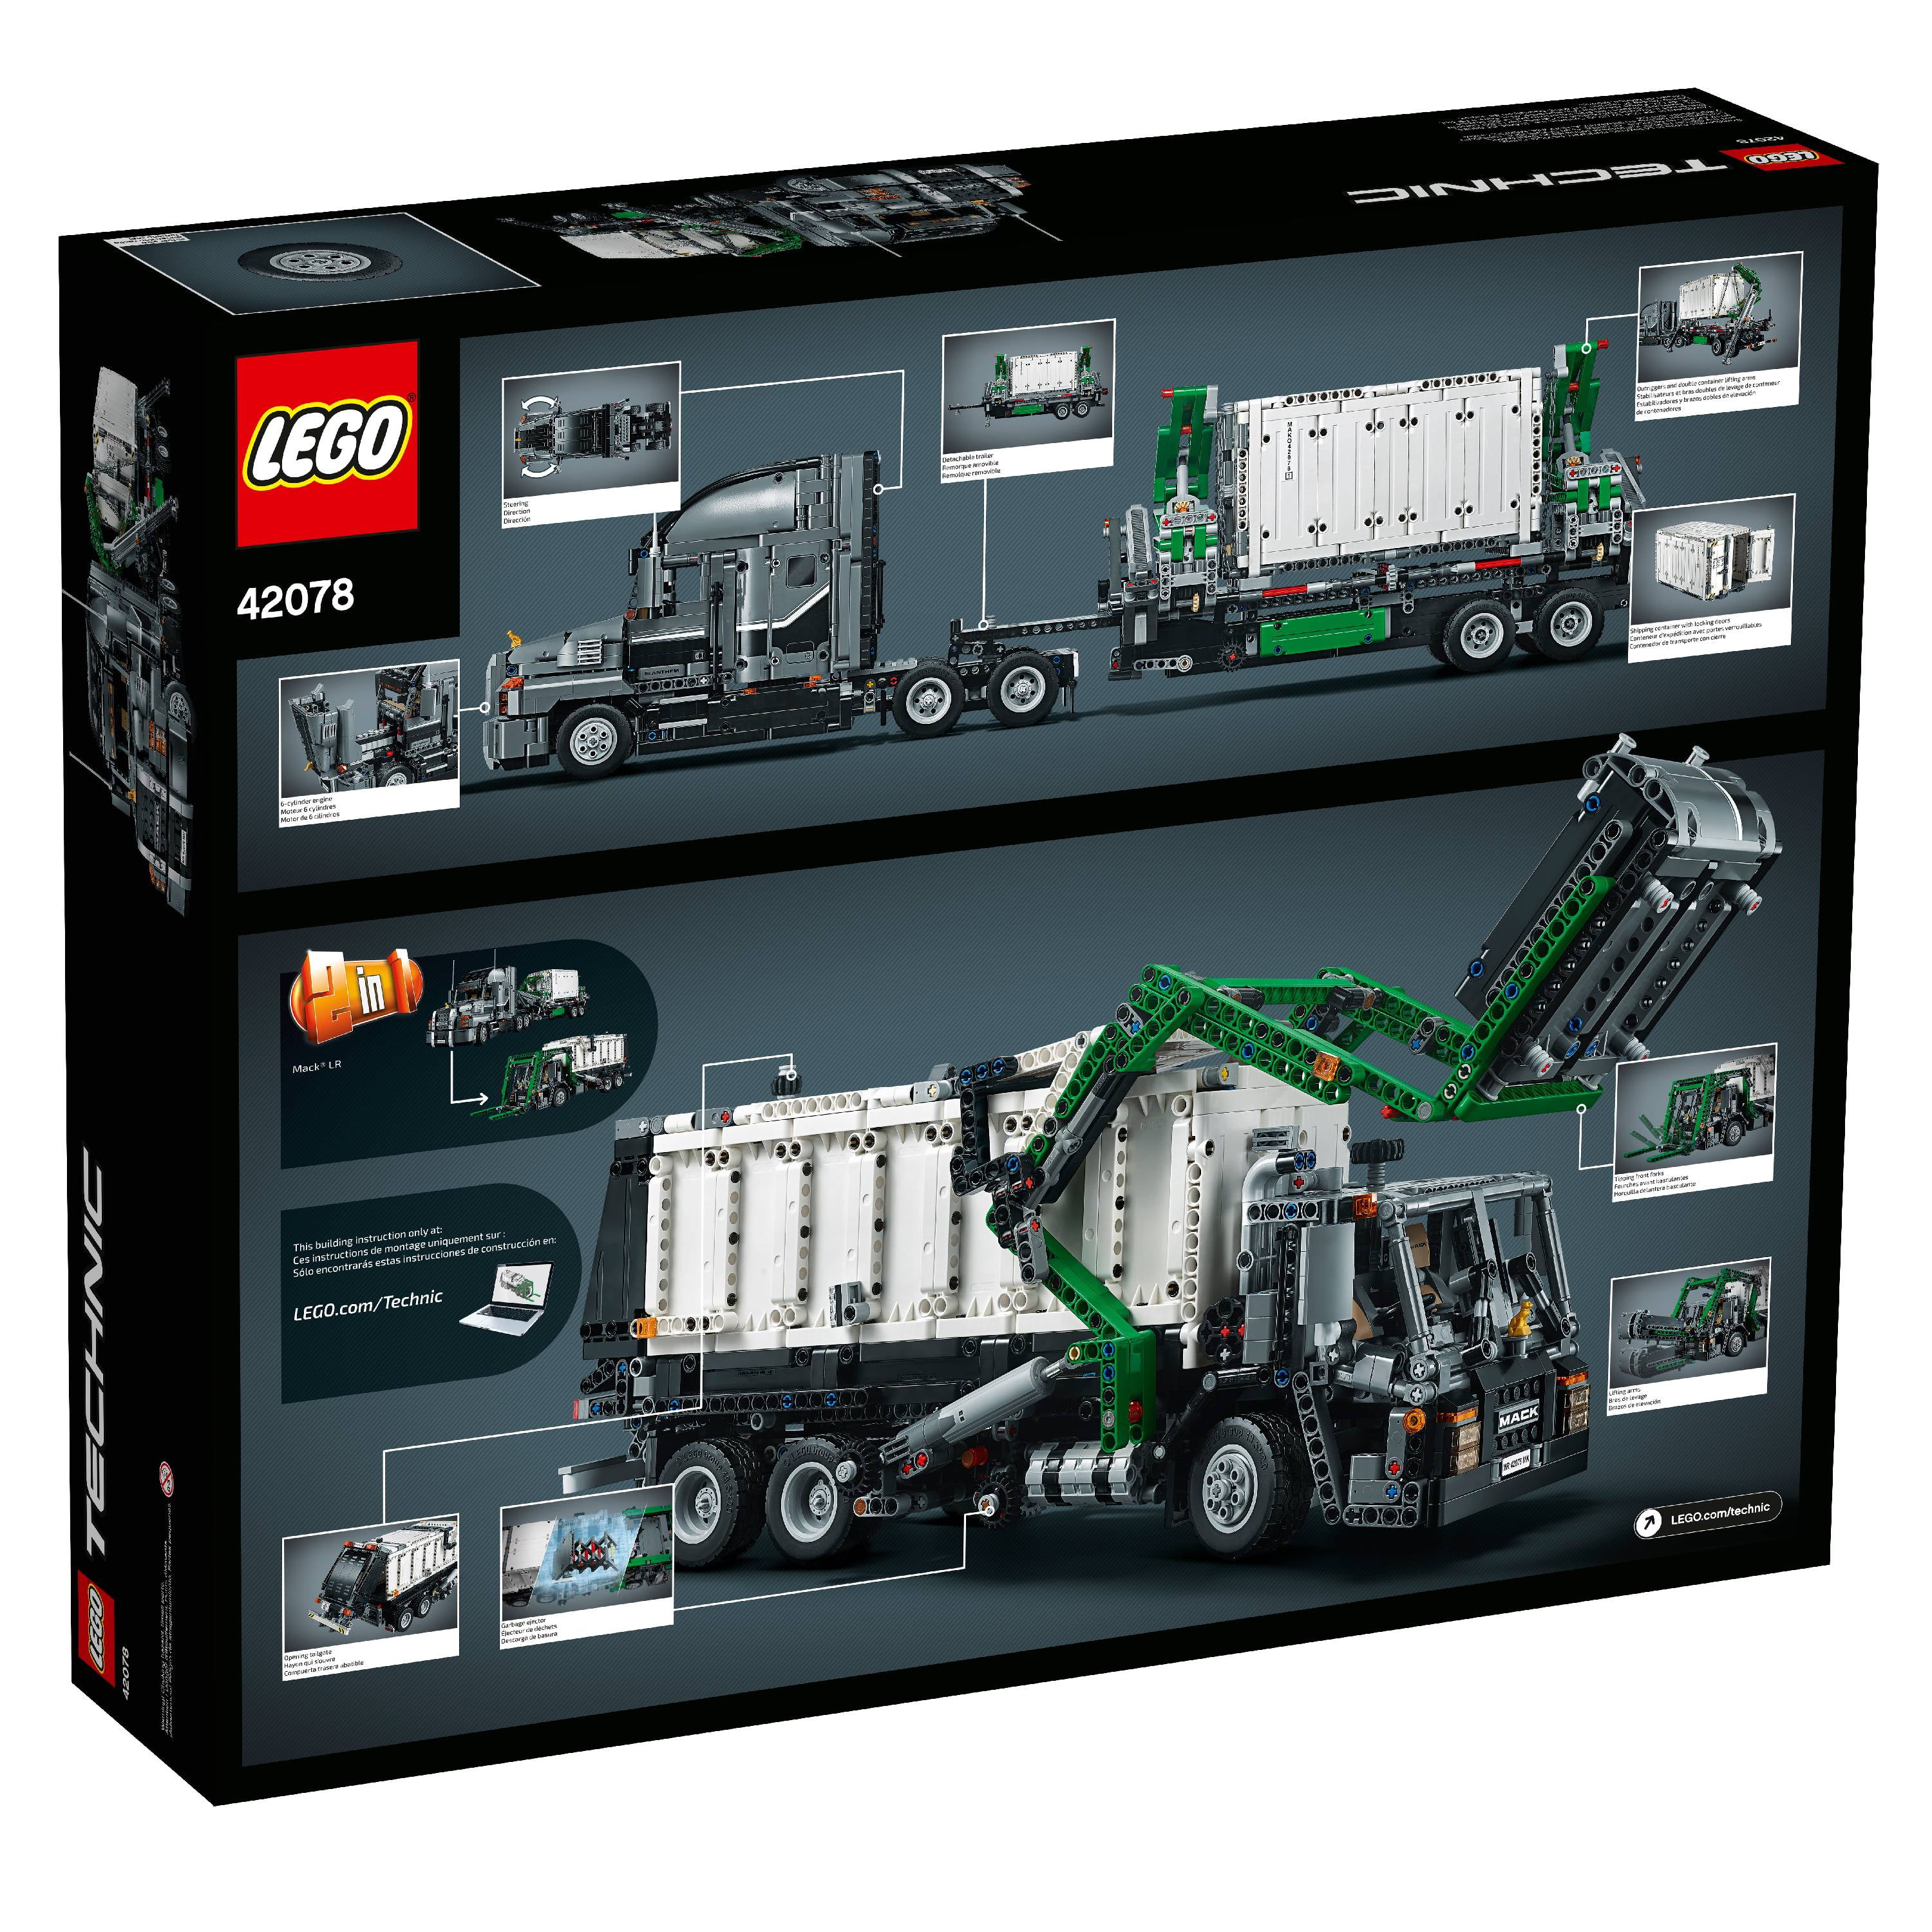 LEGO Technic Mack Anthem 42078 Building Set (2,595 Piece) Walmart.com